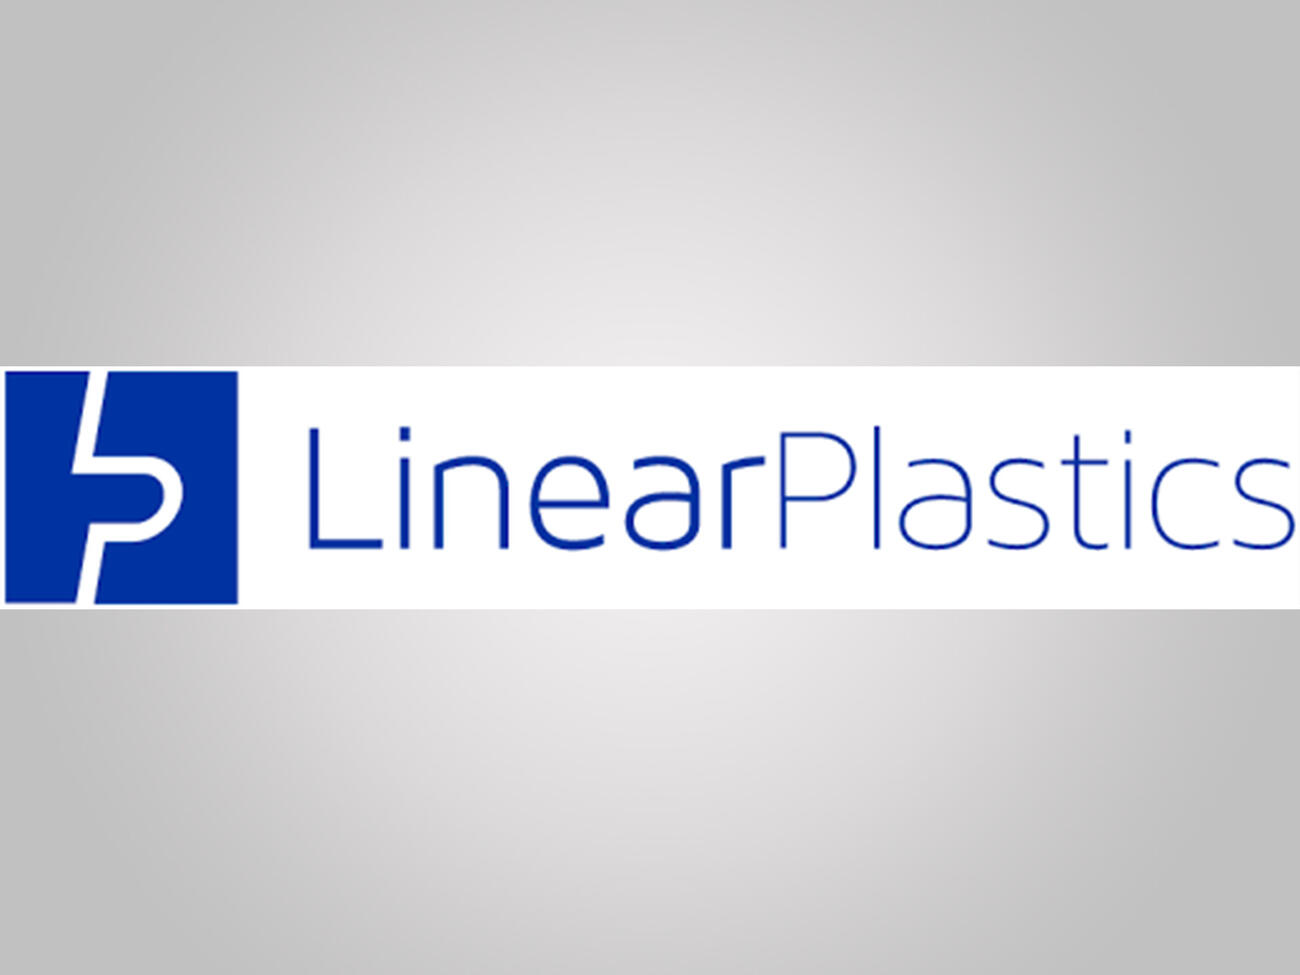 Linear Plastics